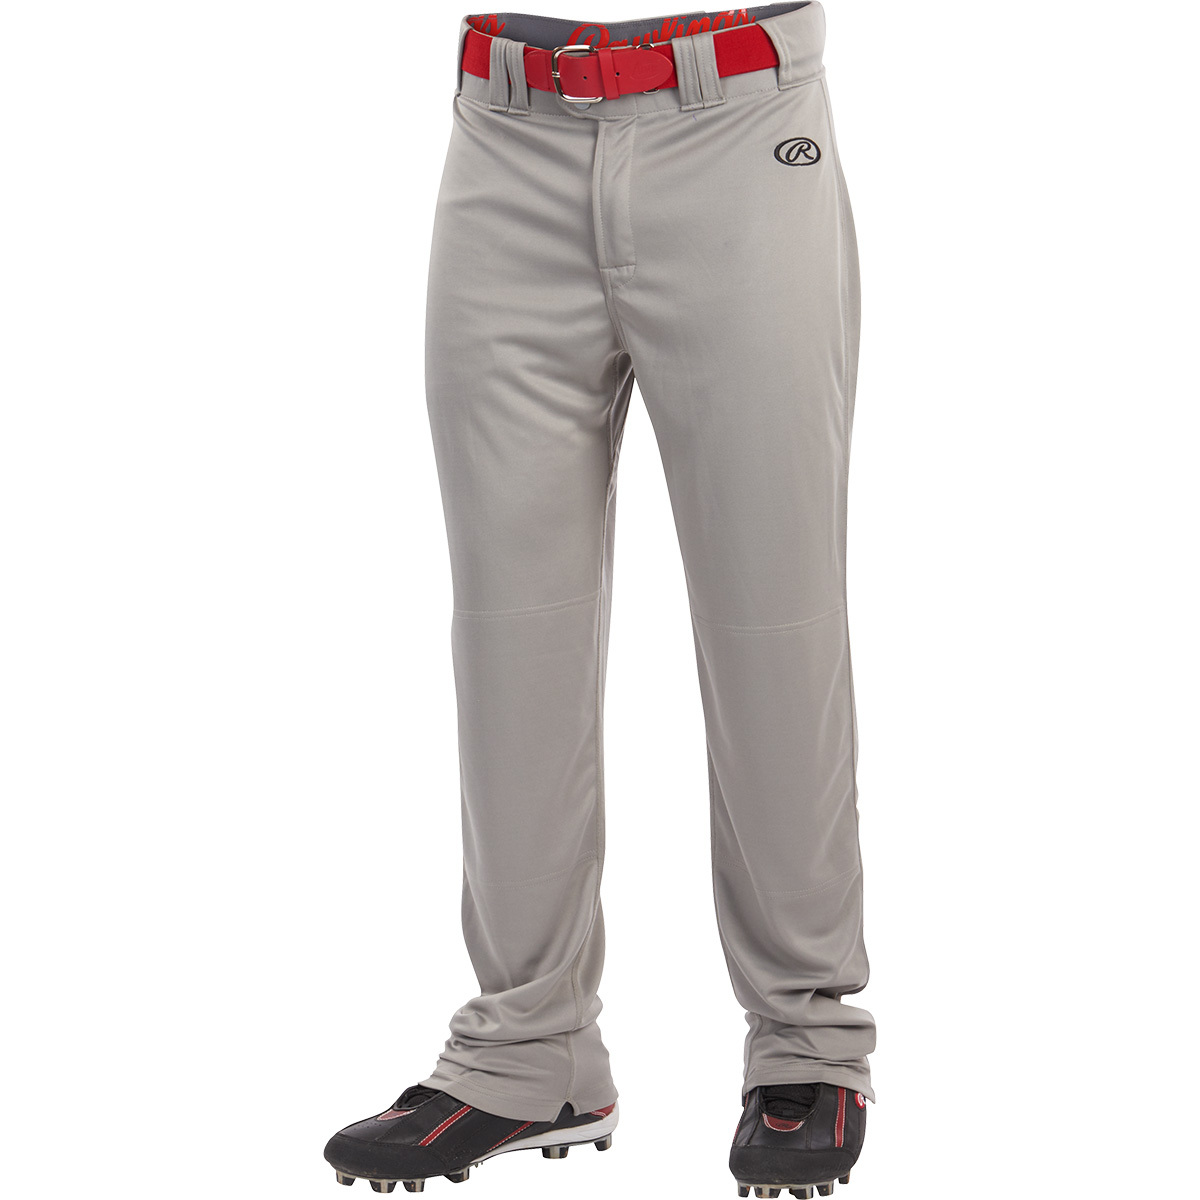 Rawlings Launch Adult Knicker Baseball Pants White or Grey S-2X 